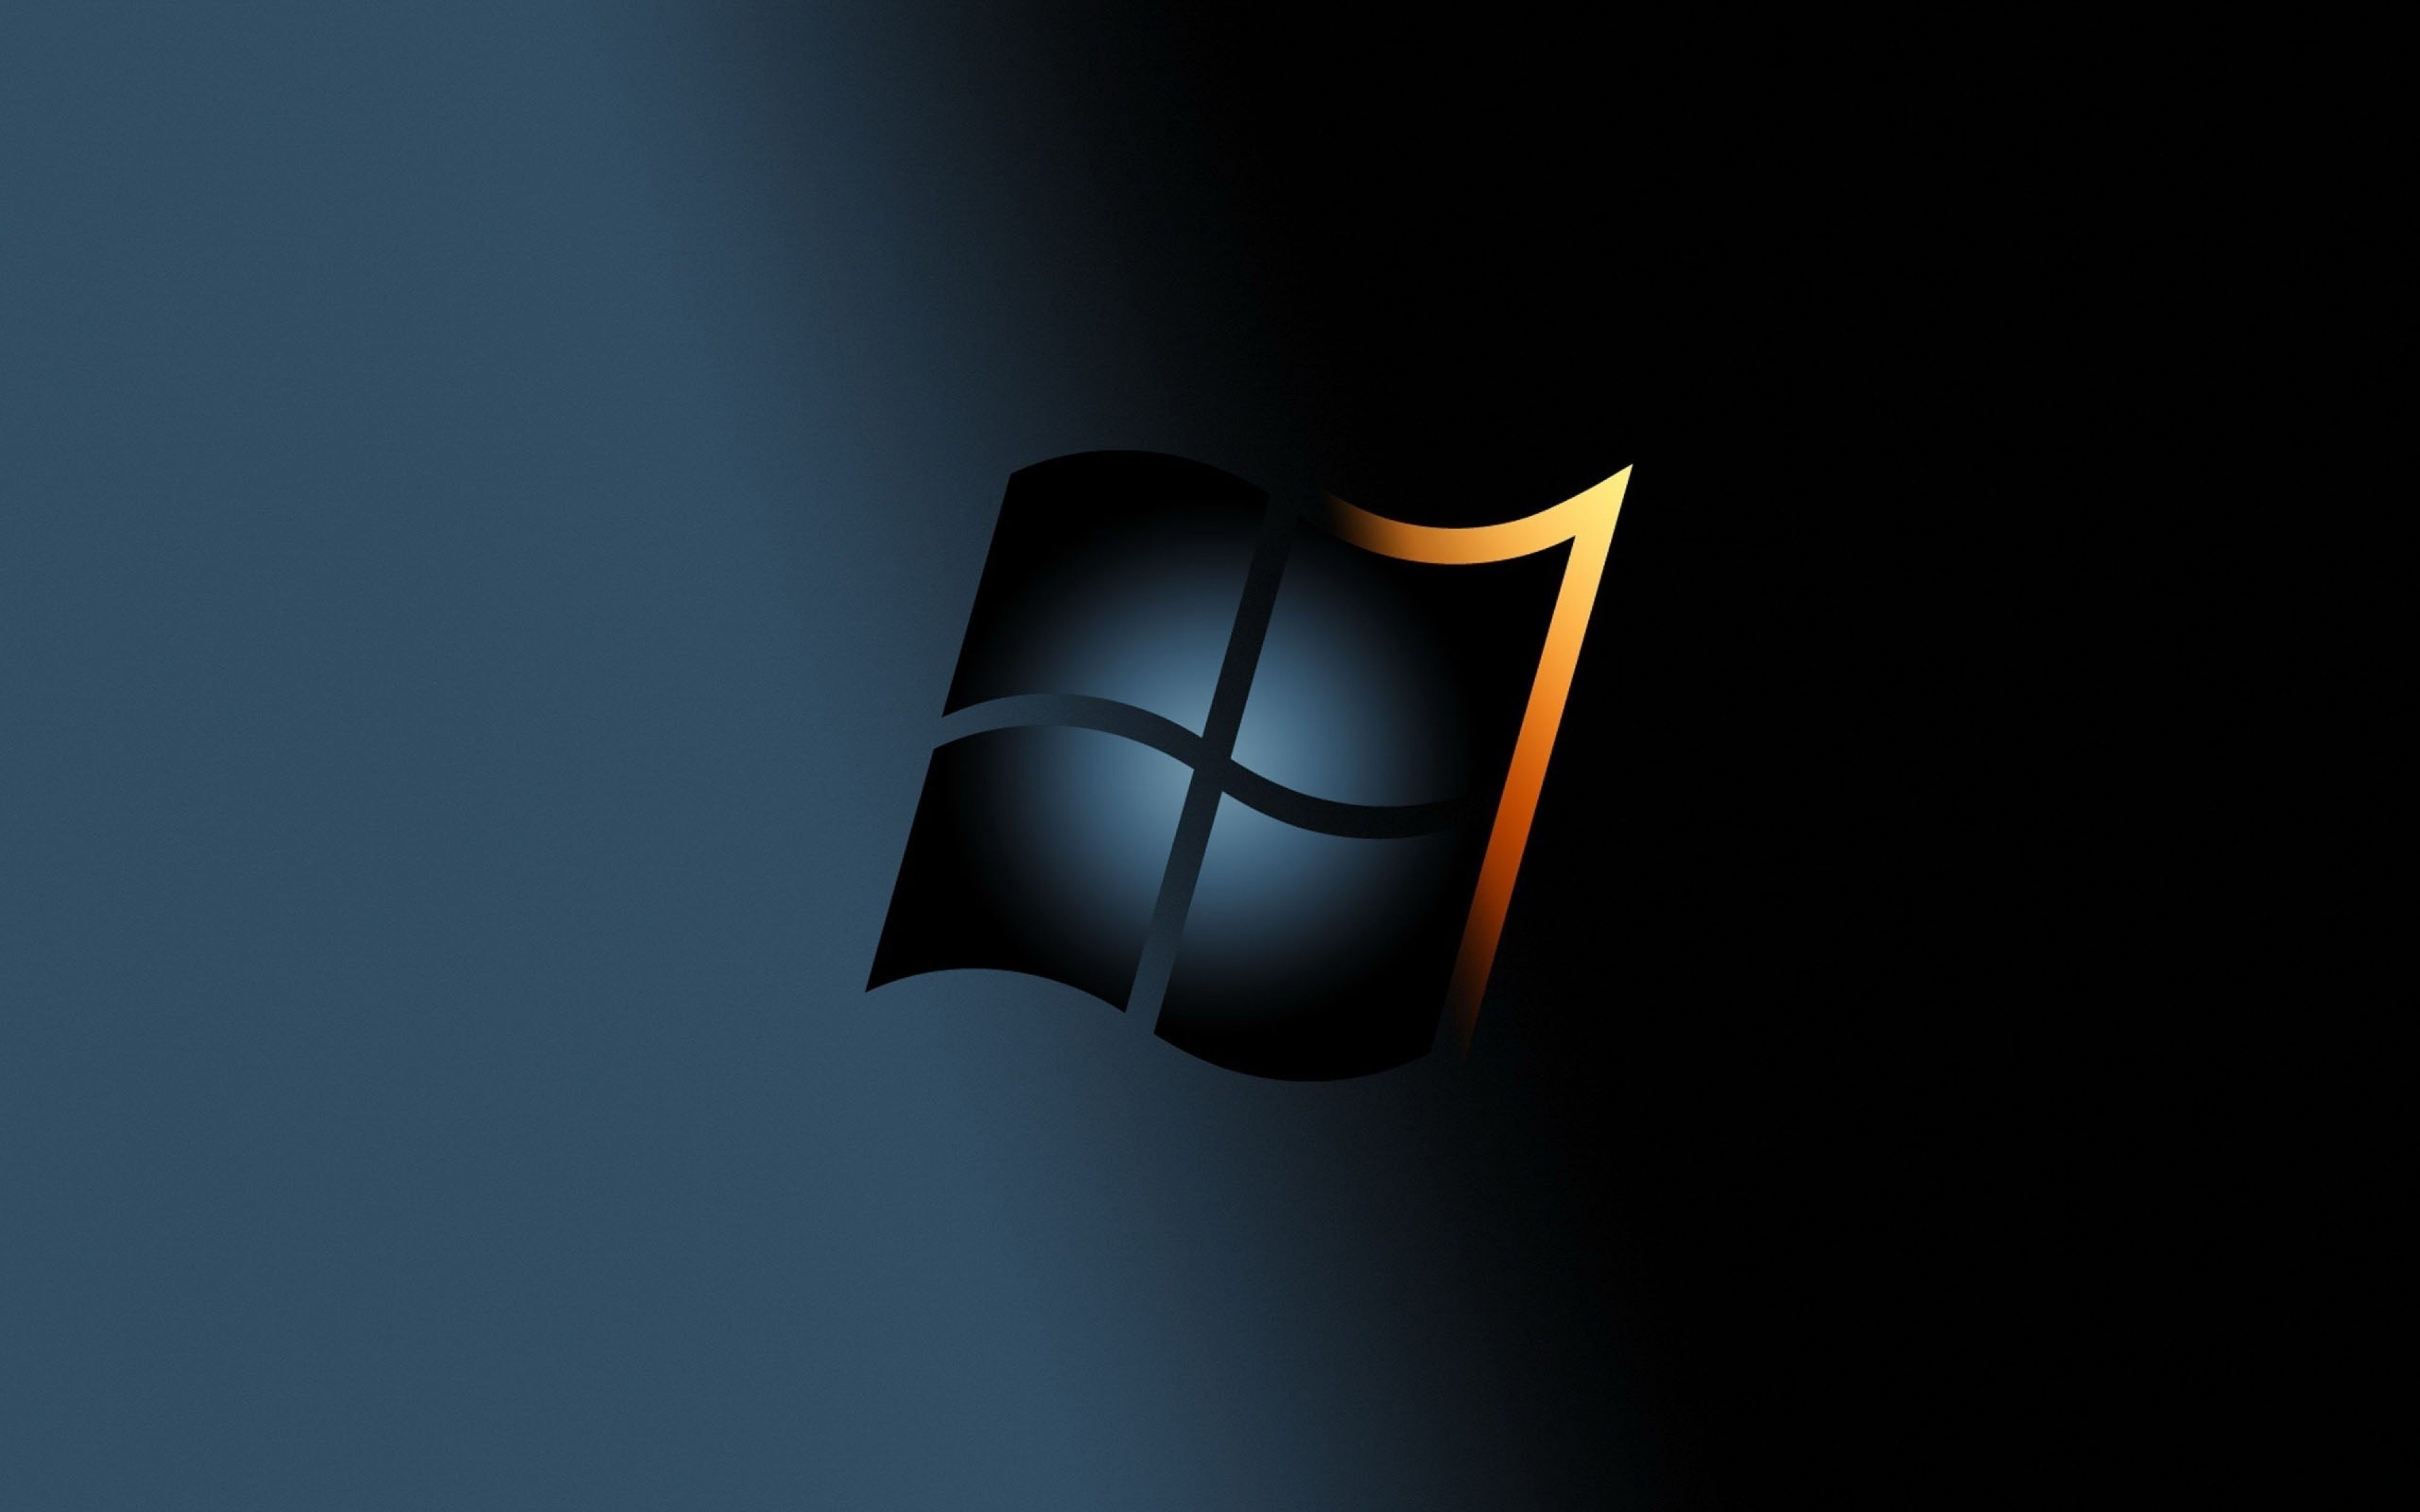 Windows 7 Background Wallpaper HD.com